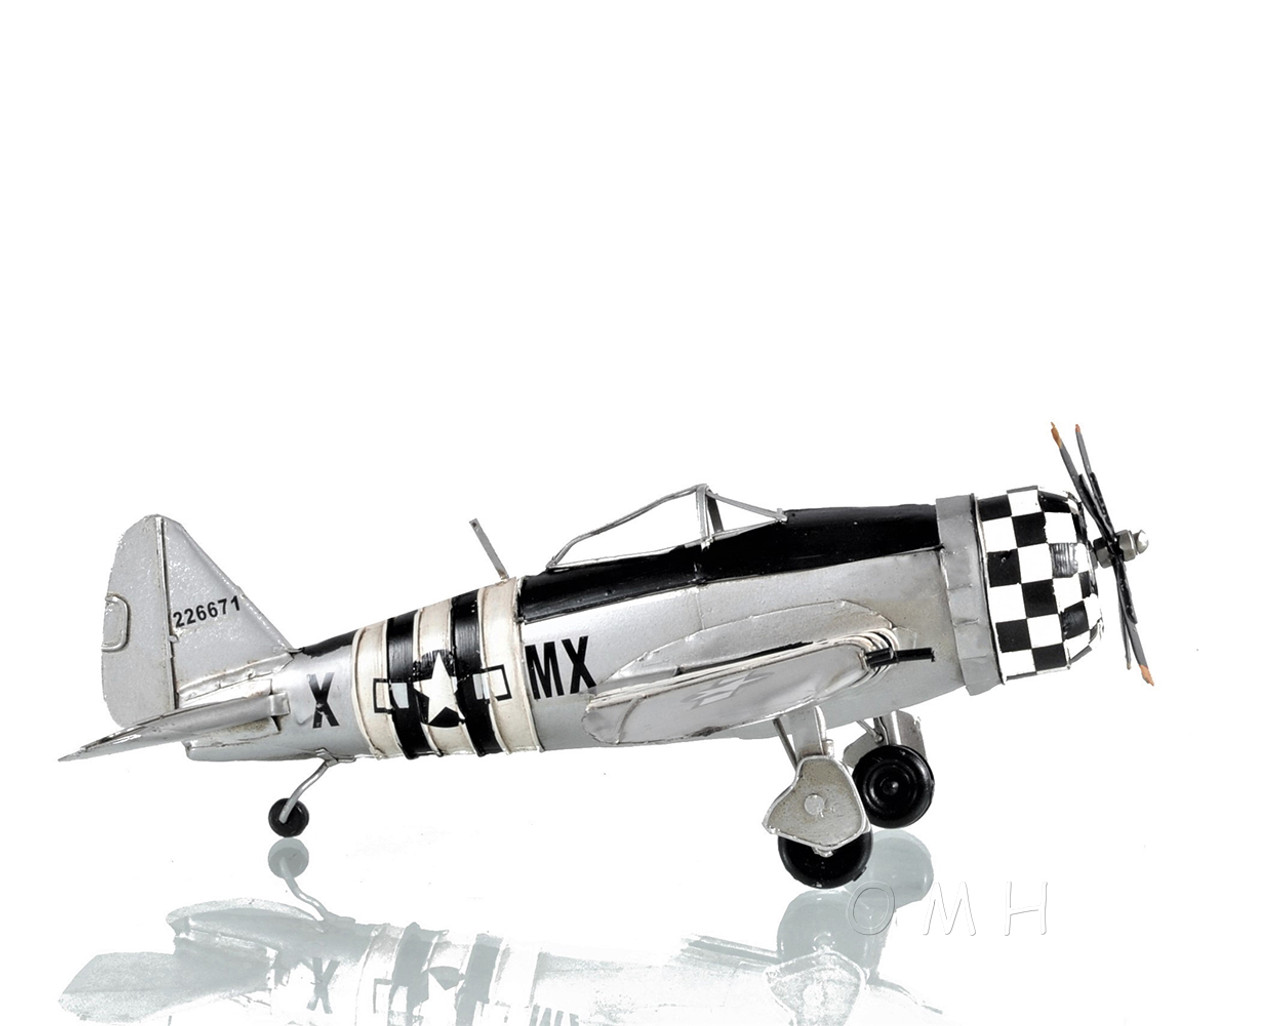 P-47 Jug Thunderbolt Fighter Bomber Model WWII Airplane